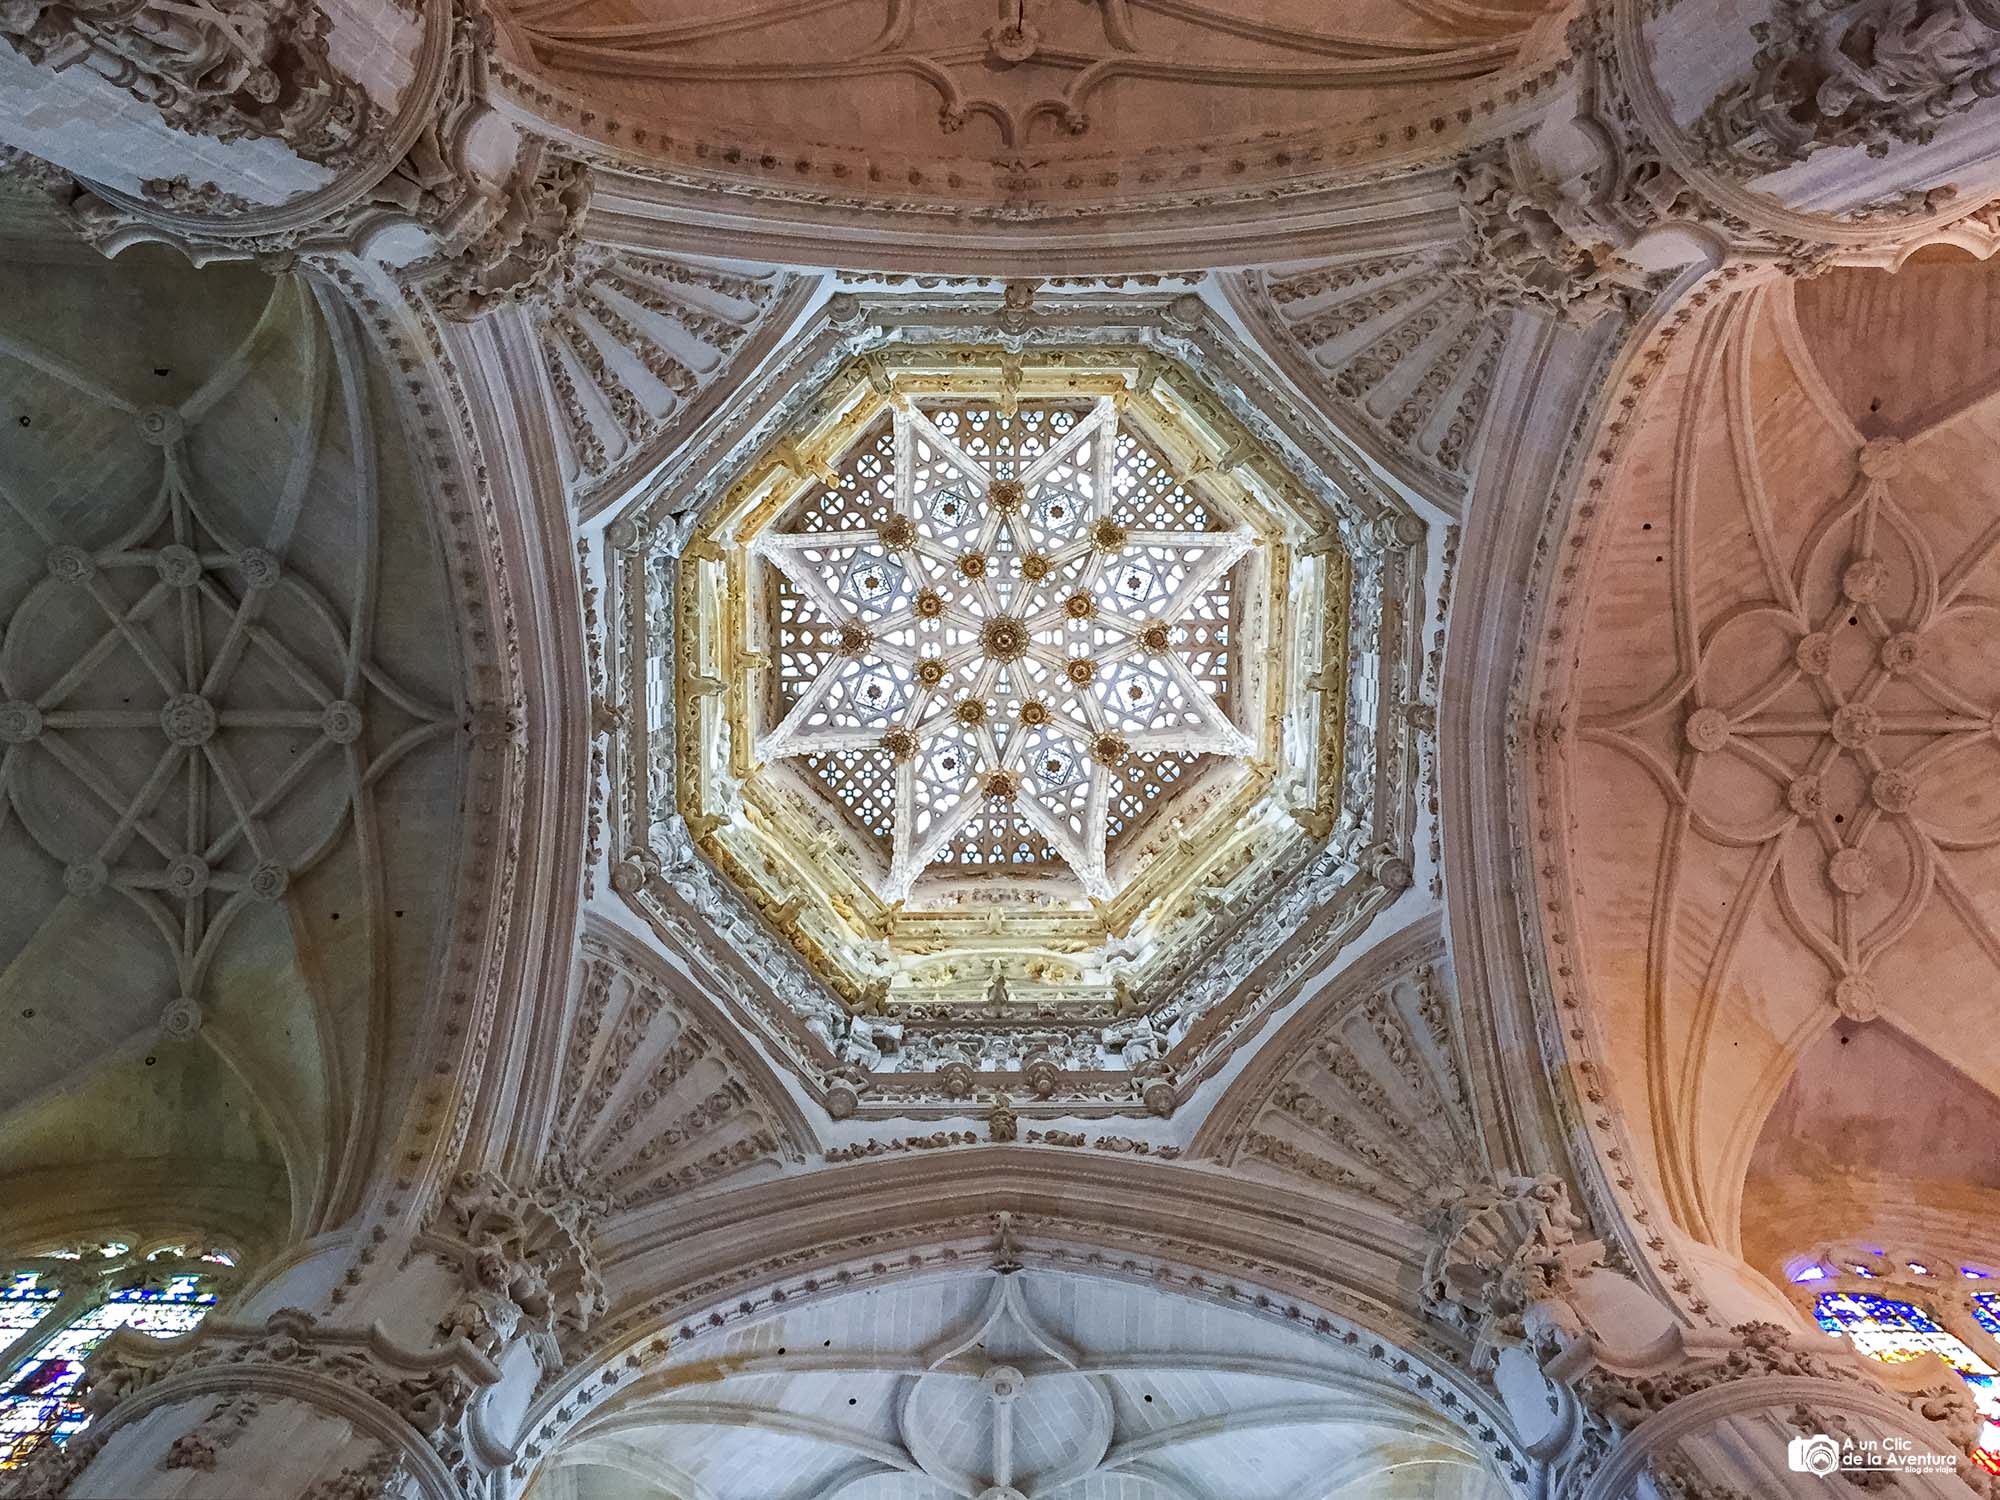 Cimborrio de la Catedral de Burgos